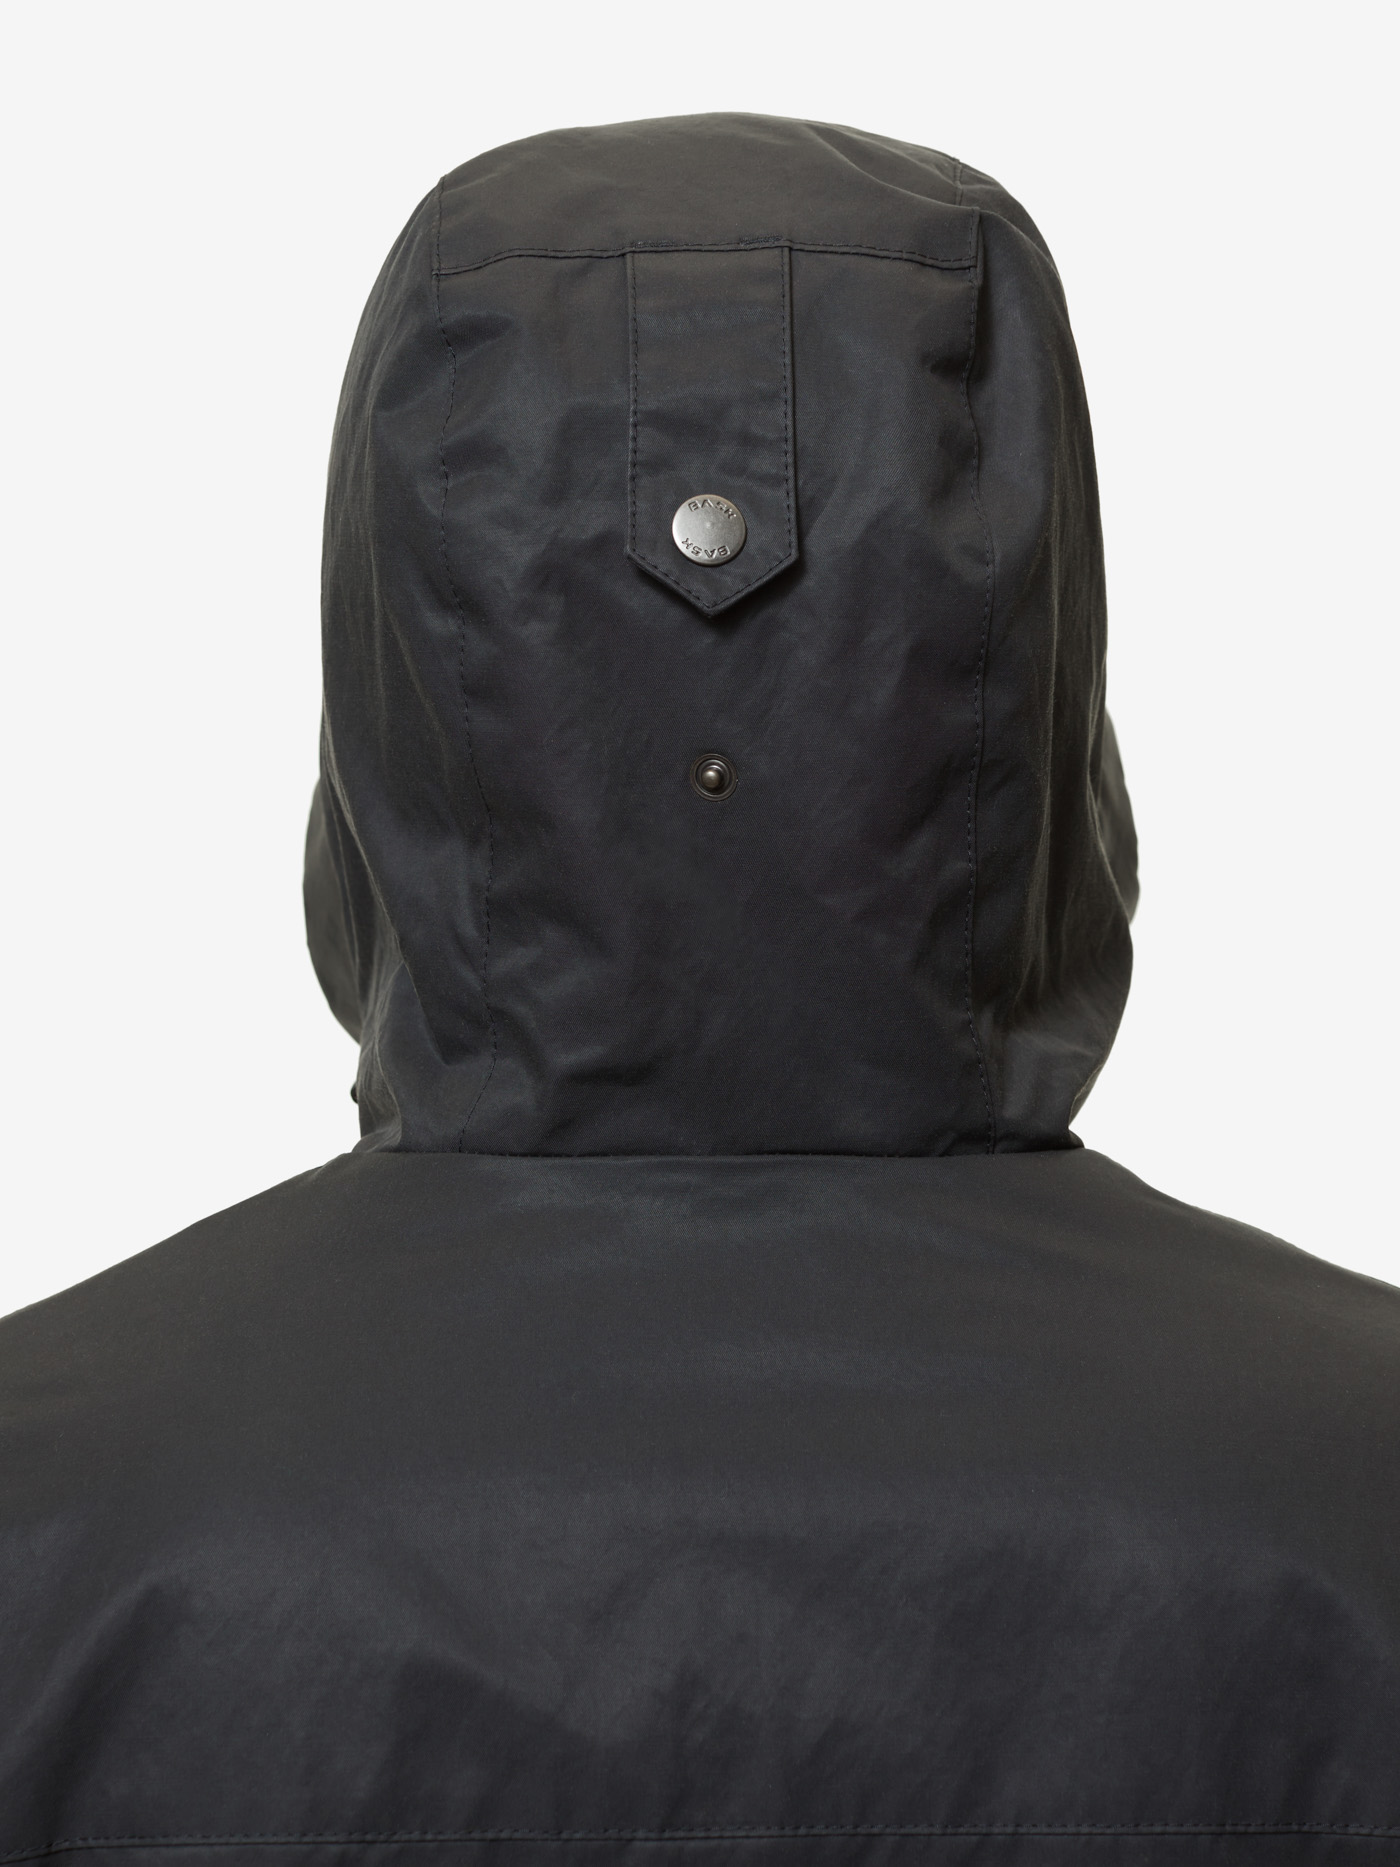 Куртка BASK, размер 50, цвет антрацит 22014-9674-050 Quebec v2 - фото 8